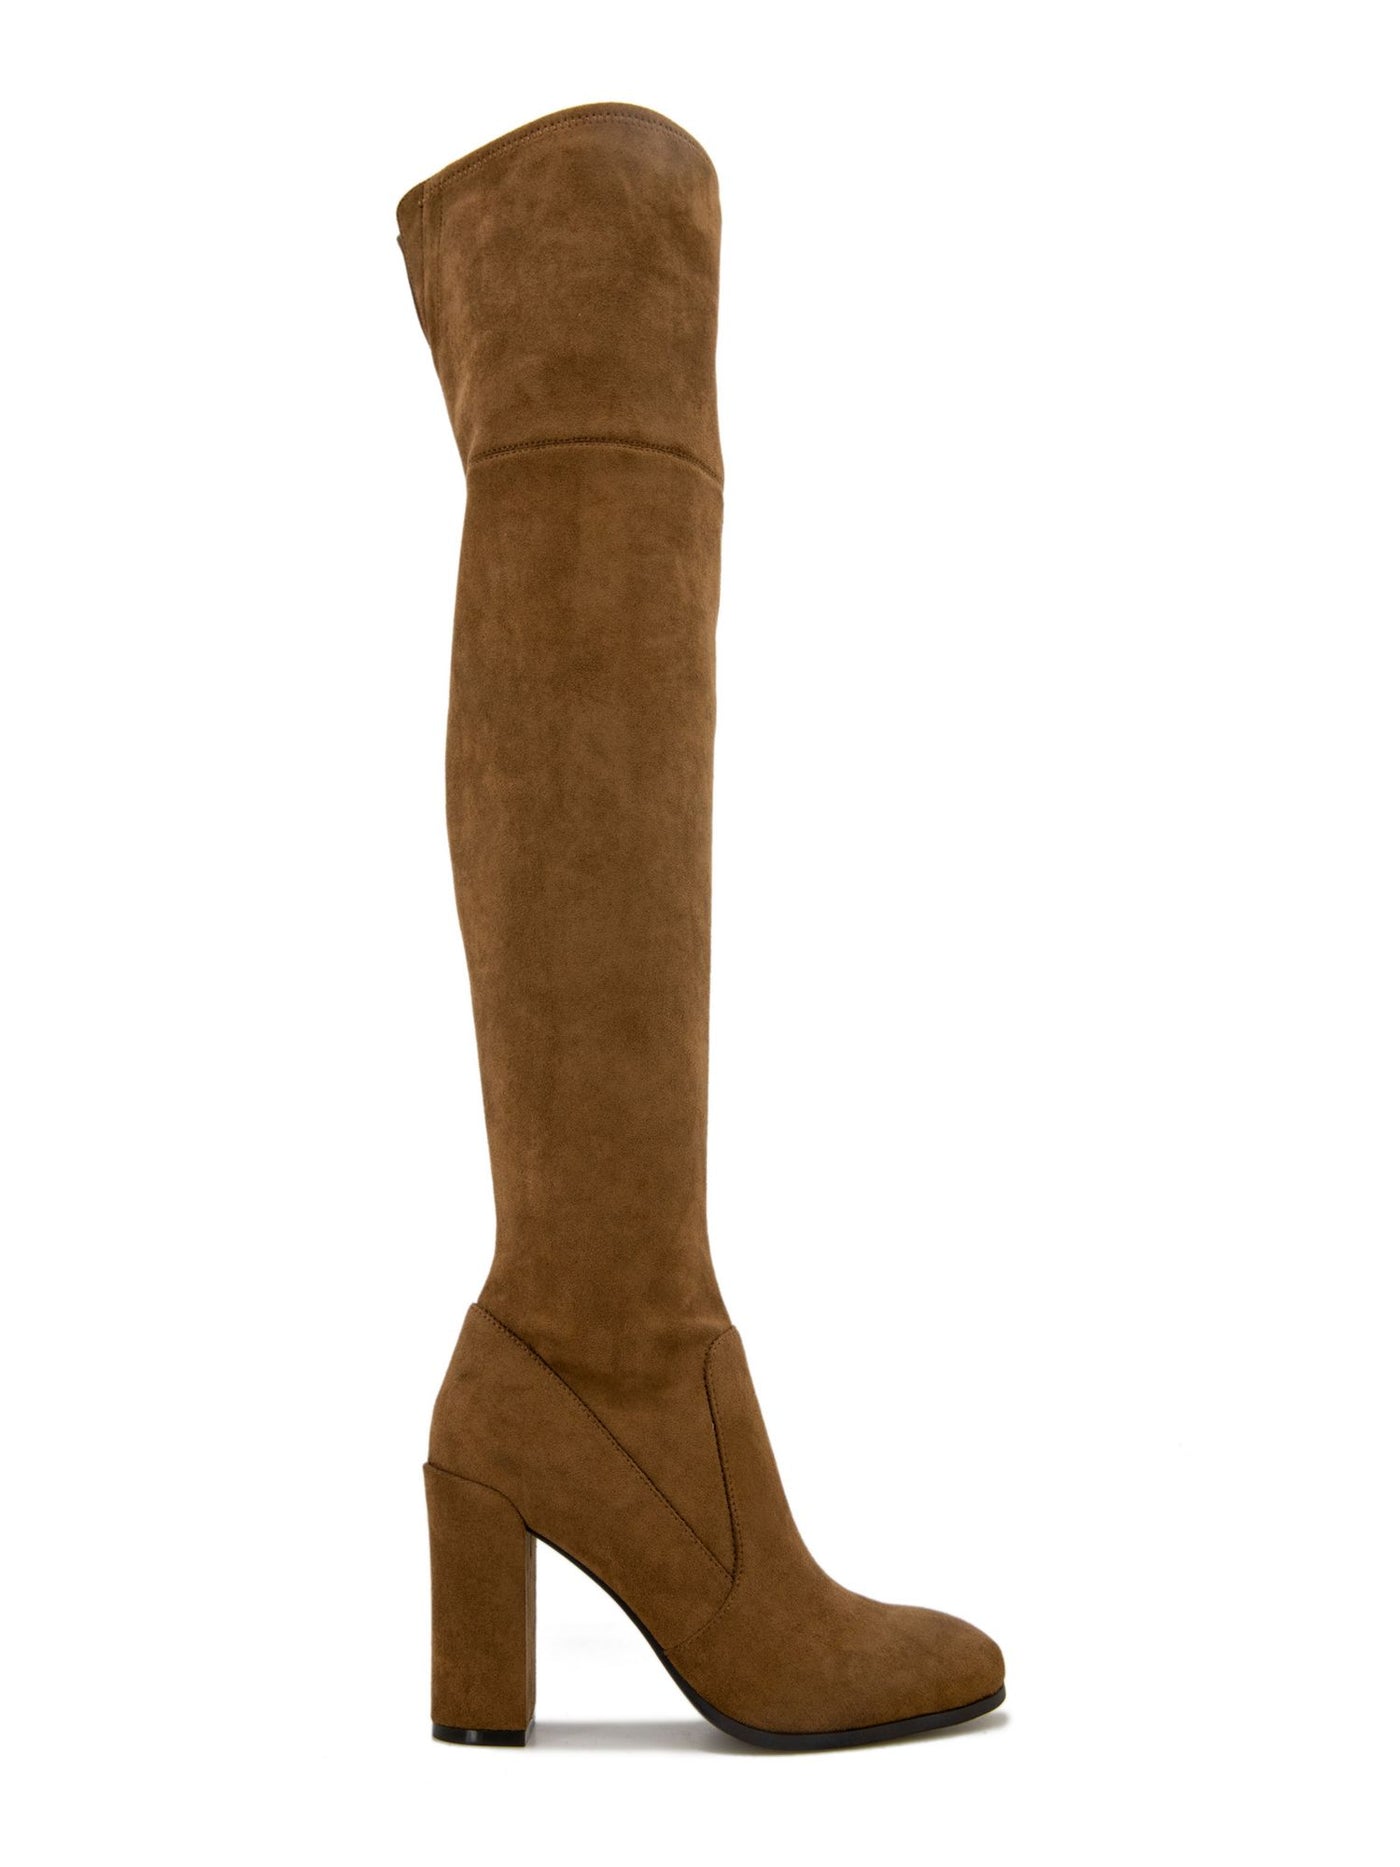 KENNETH COLE NEW YORK Womens Brown Inside Half Zip Justin Round Toe Block Heel Dress Boots 11 M